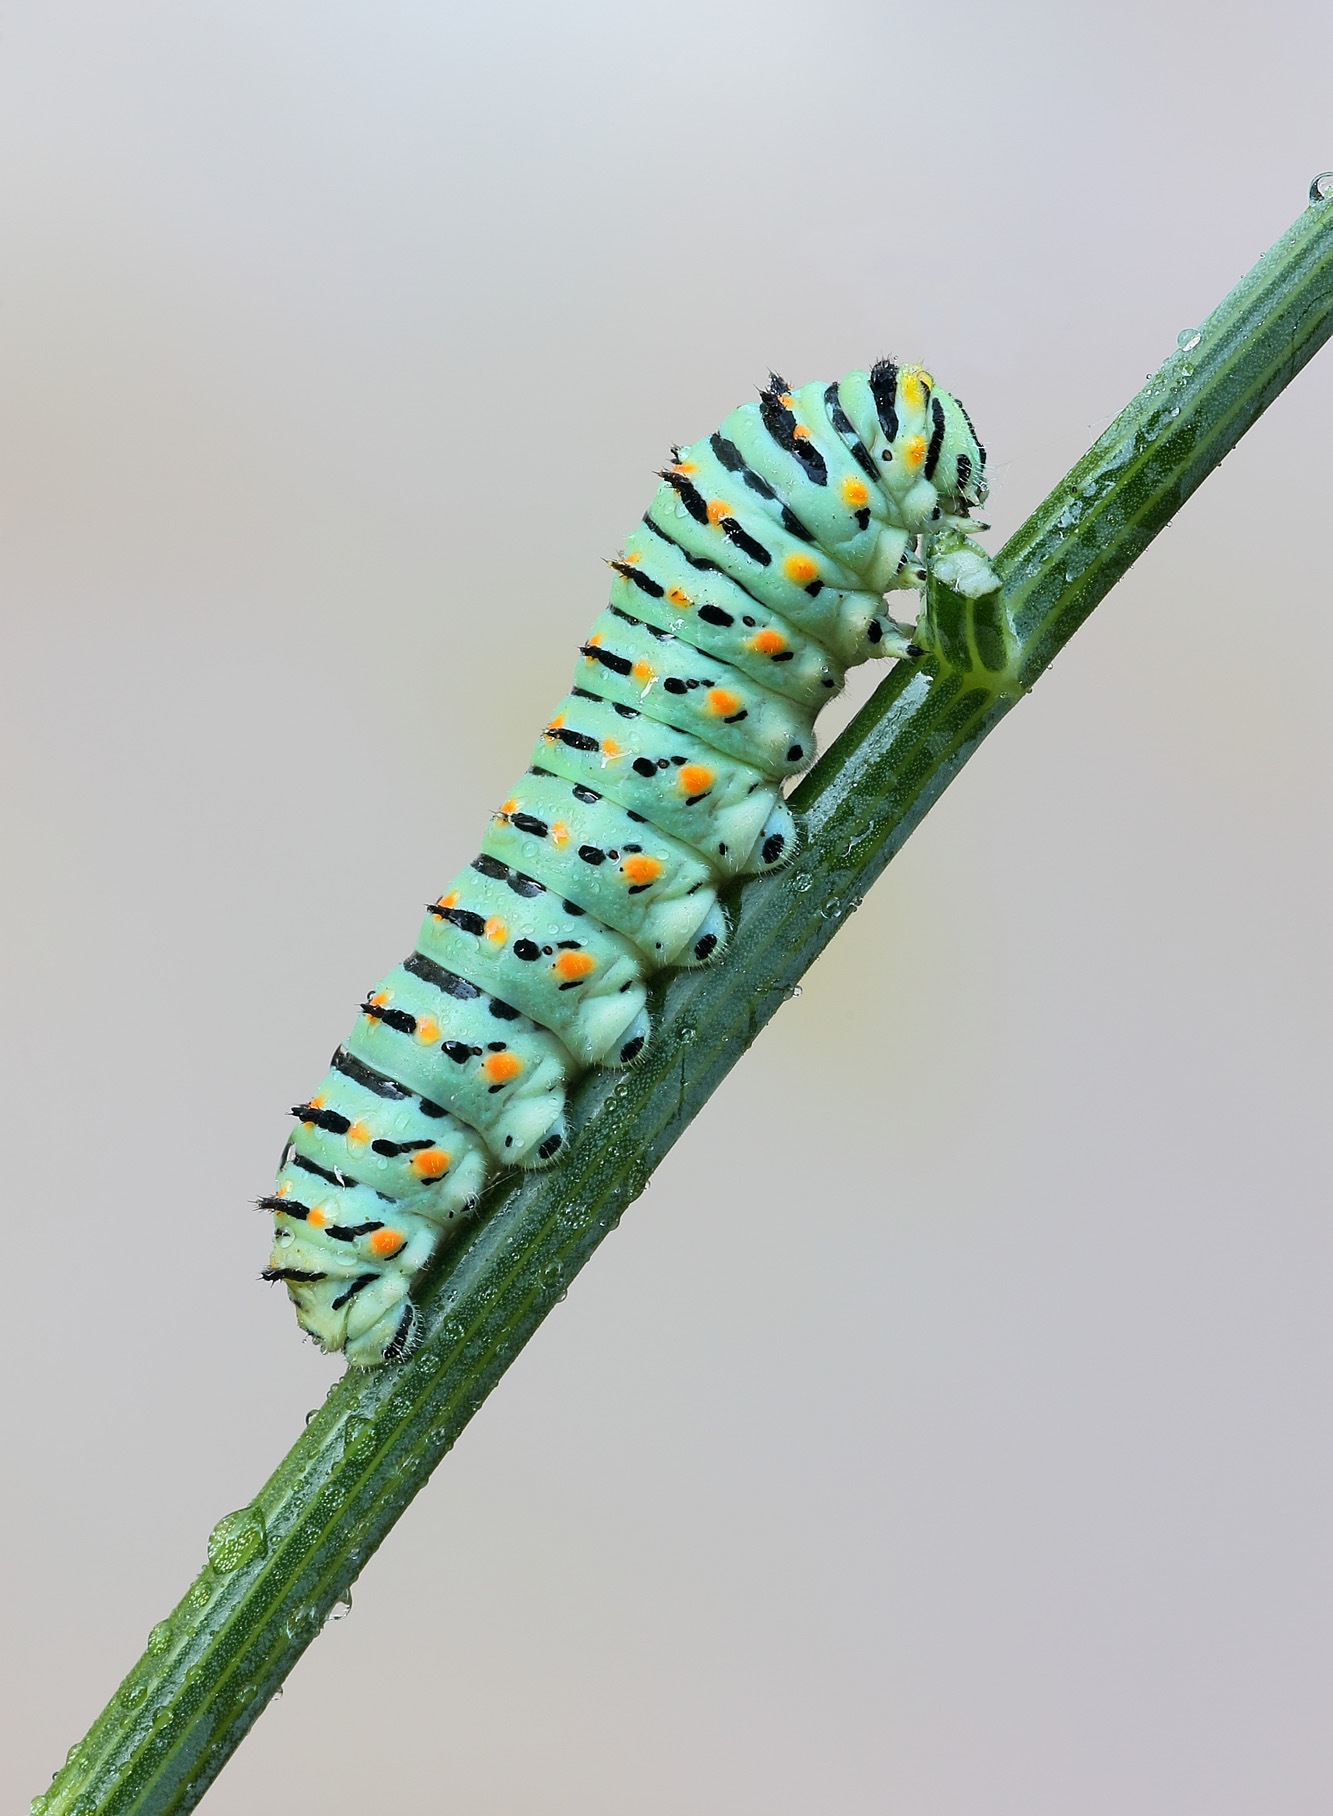 caterpillar of swallowtail ......